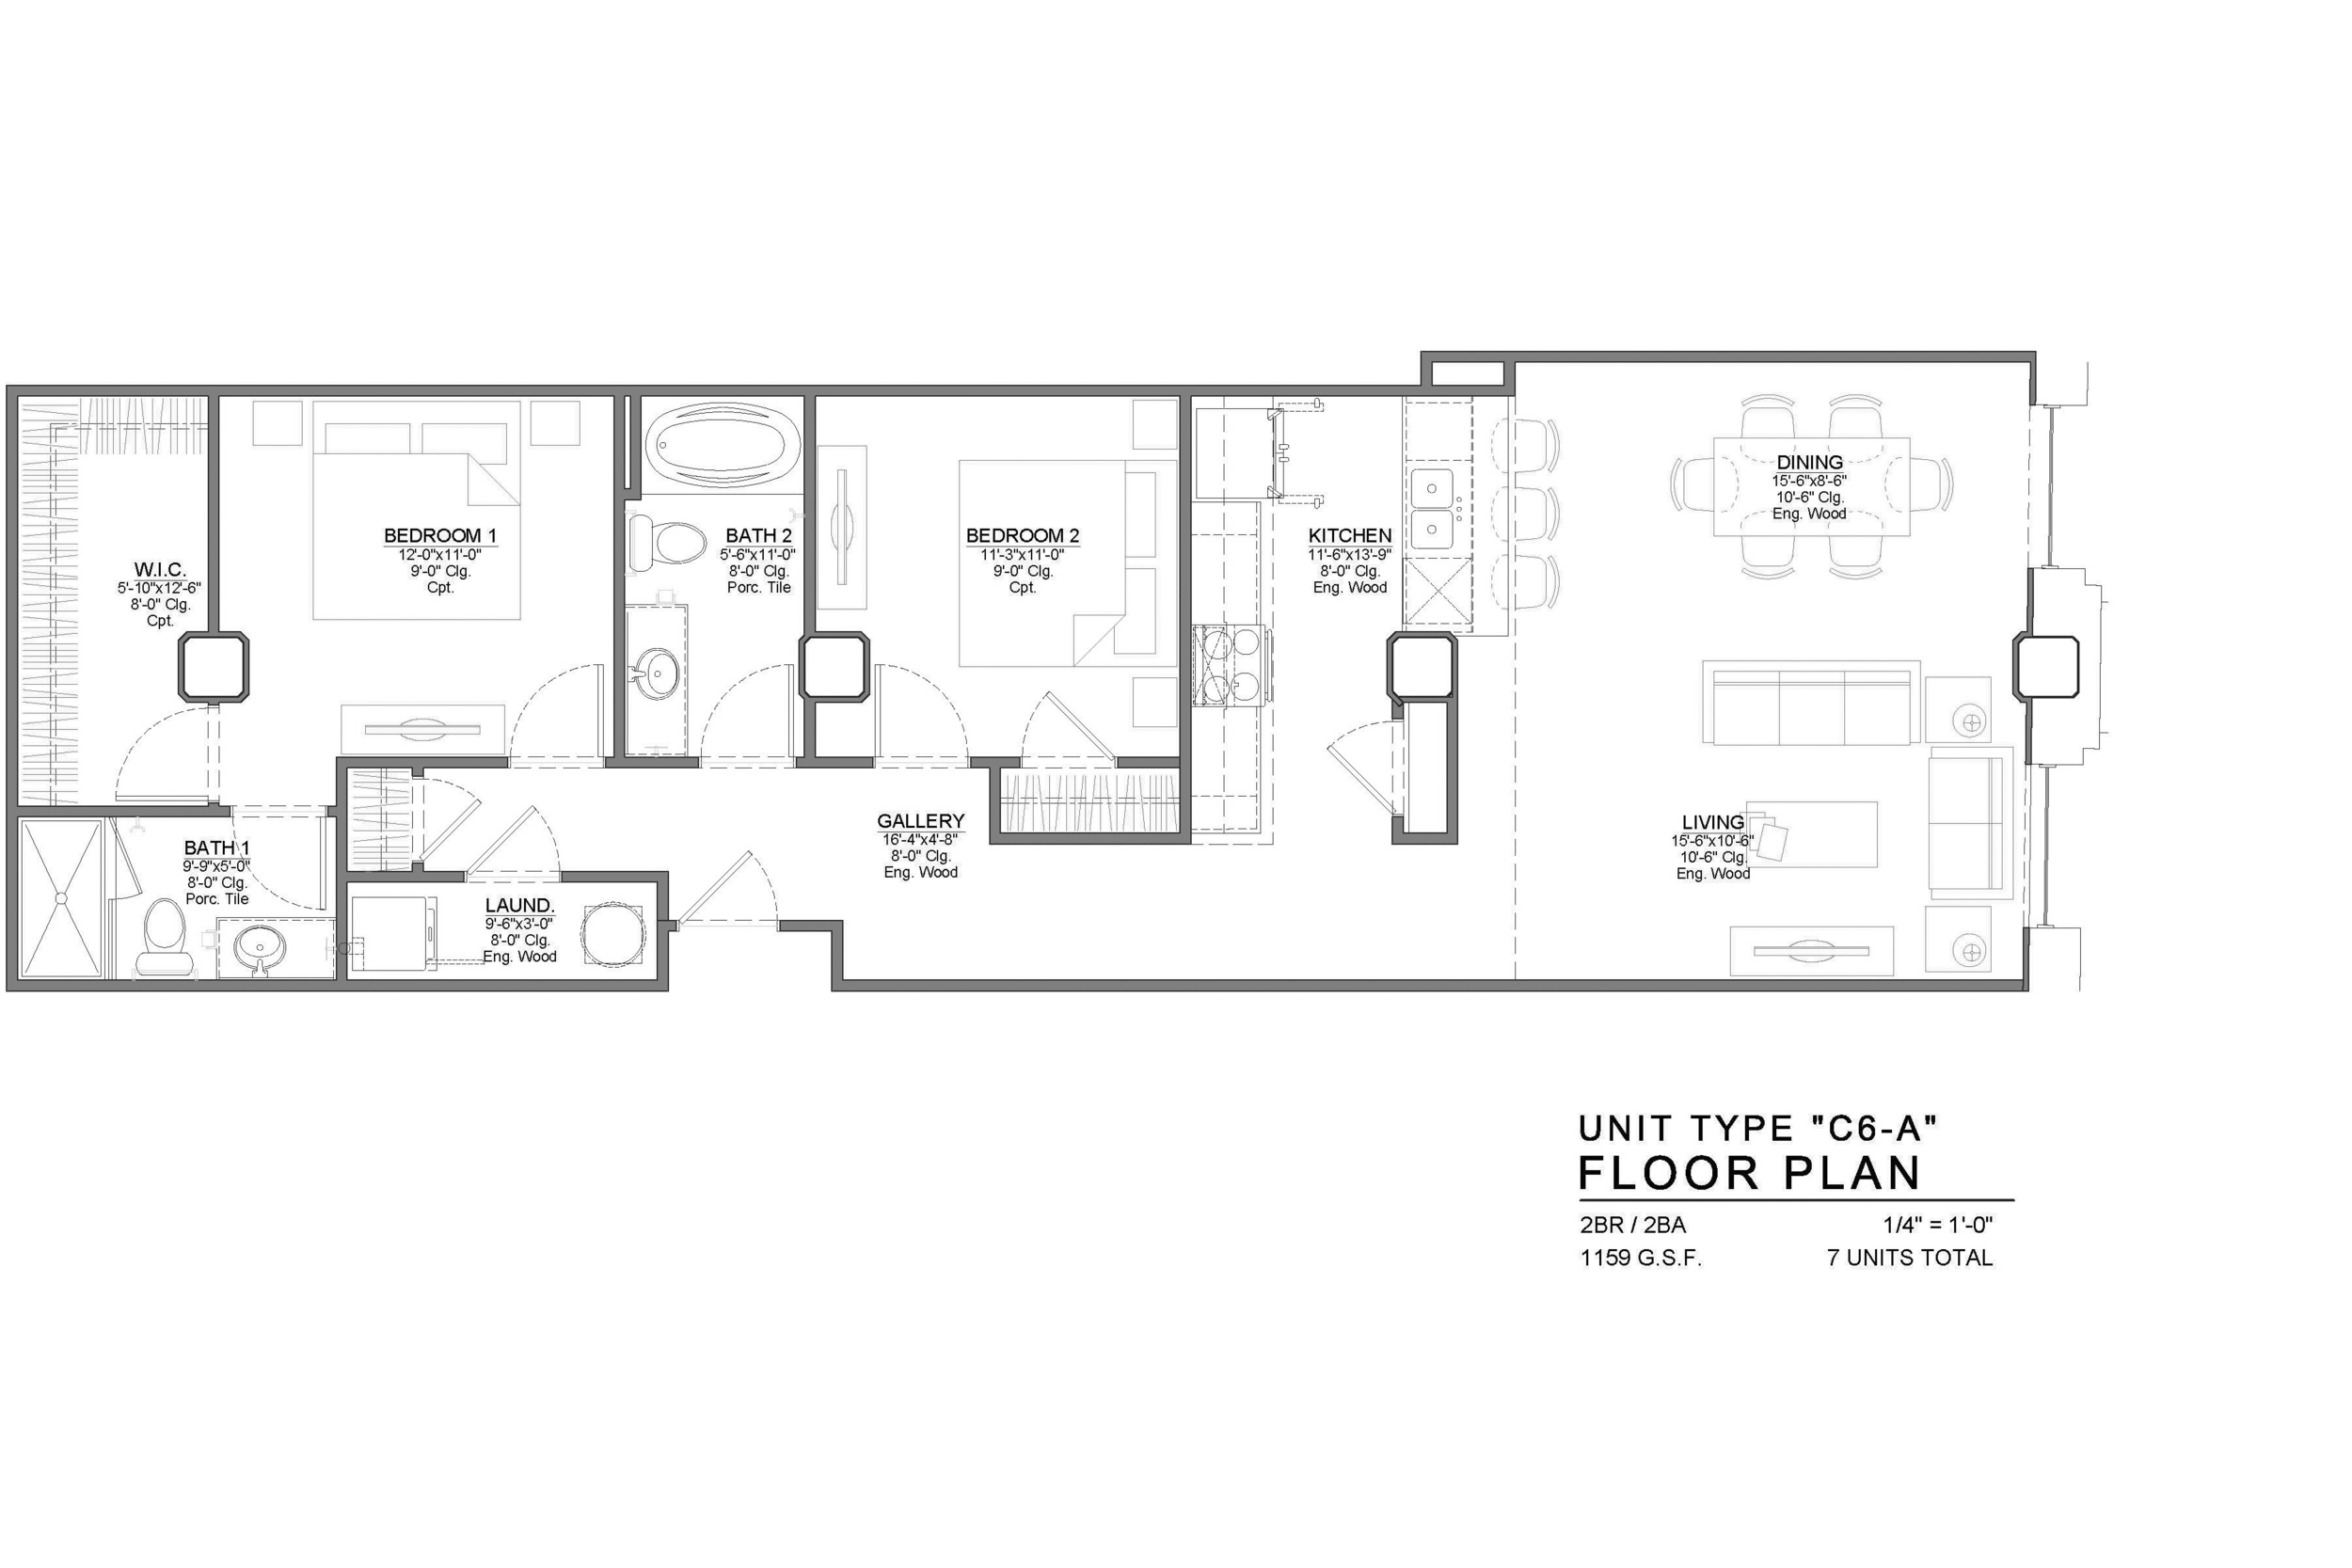 C6-A FLOOR PLAN: 2 BEDROOM / 2 BATH